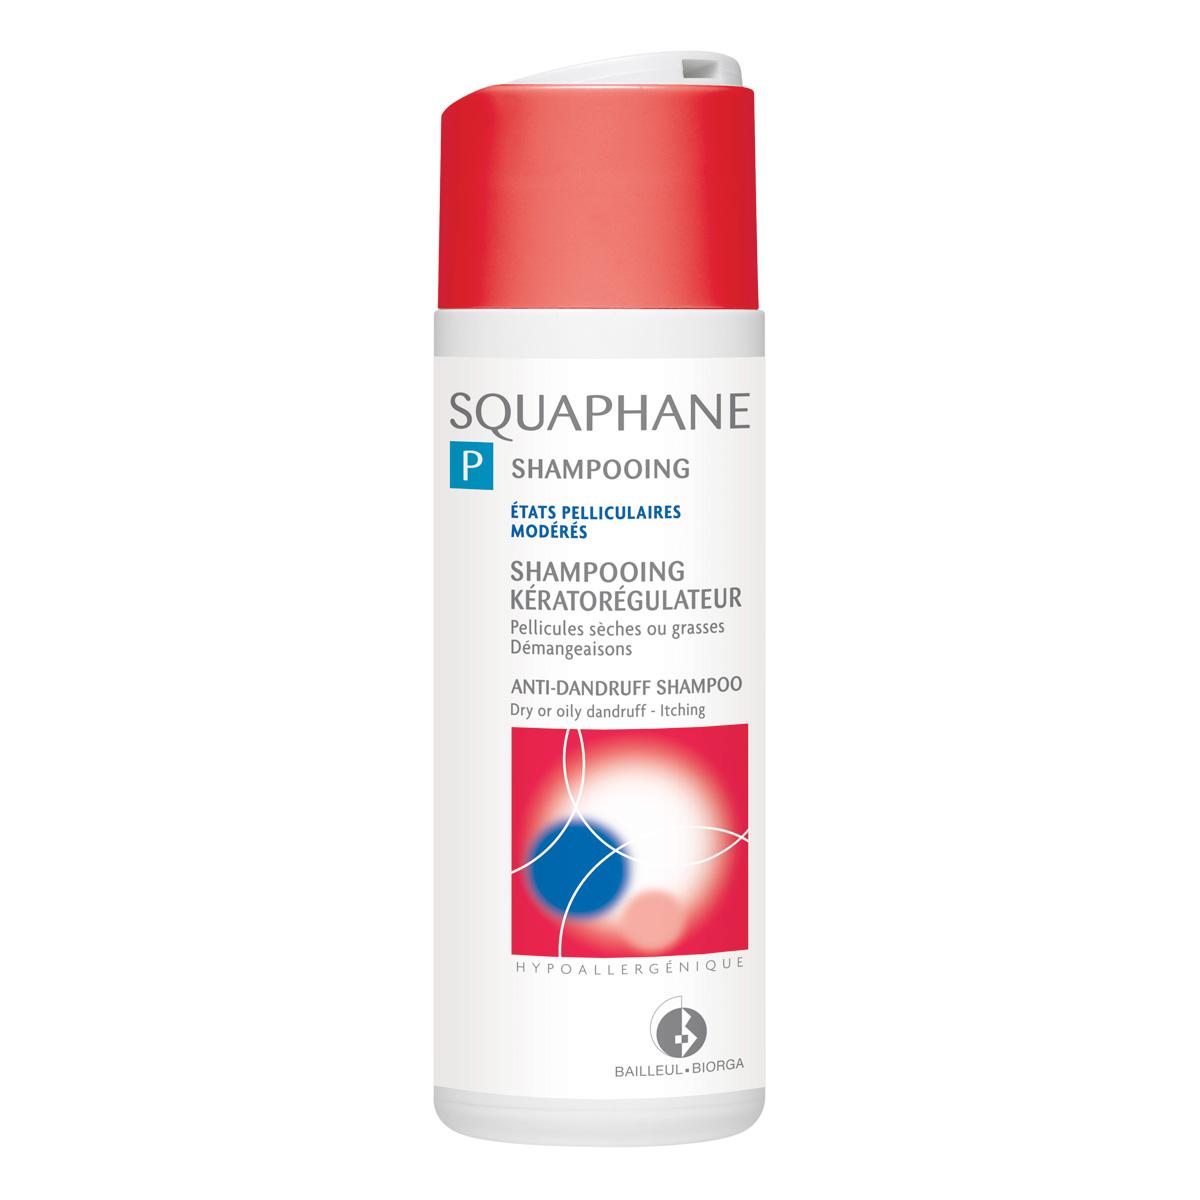 Squaphane P shampoo  - شامپو اسکو افن-پی